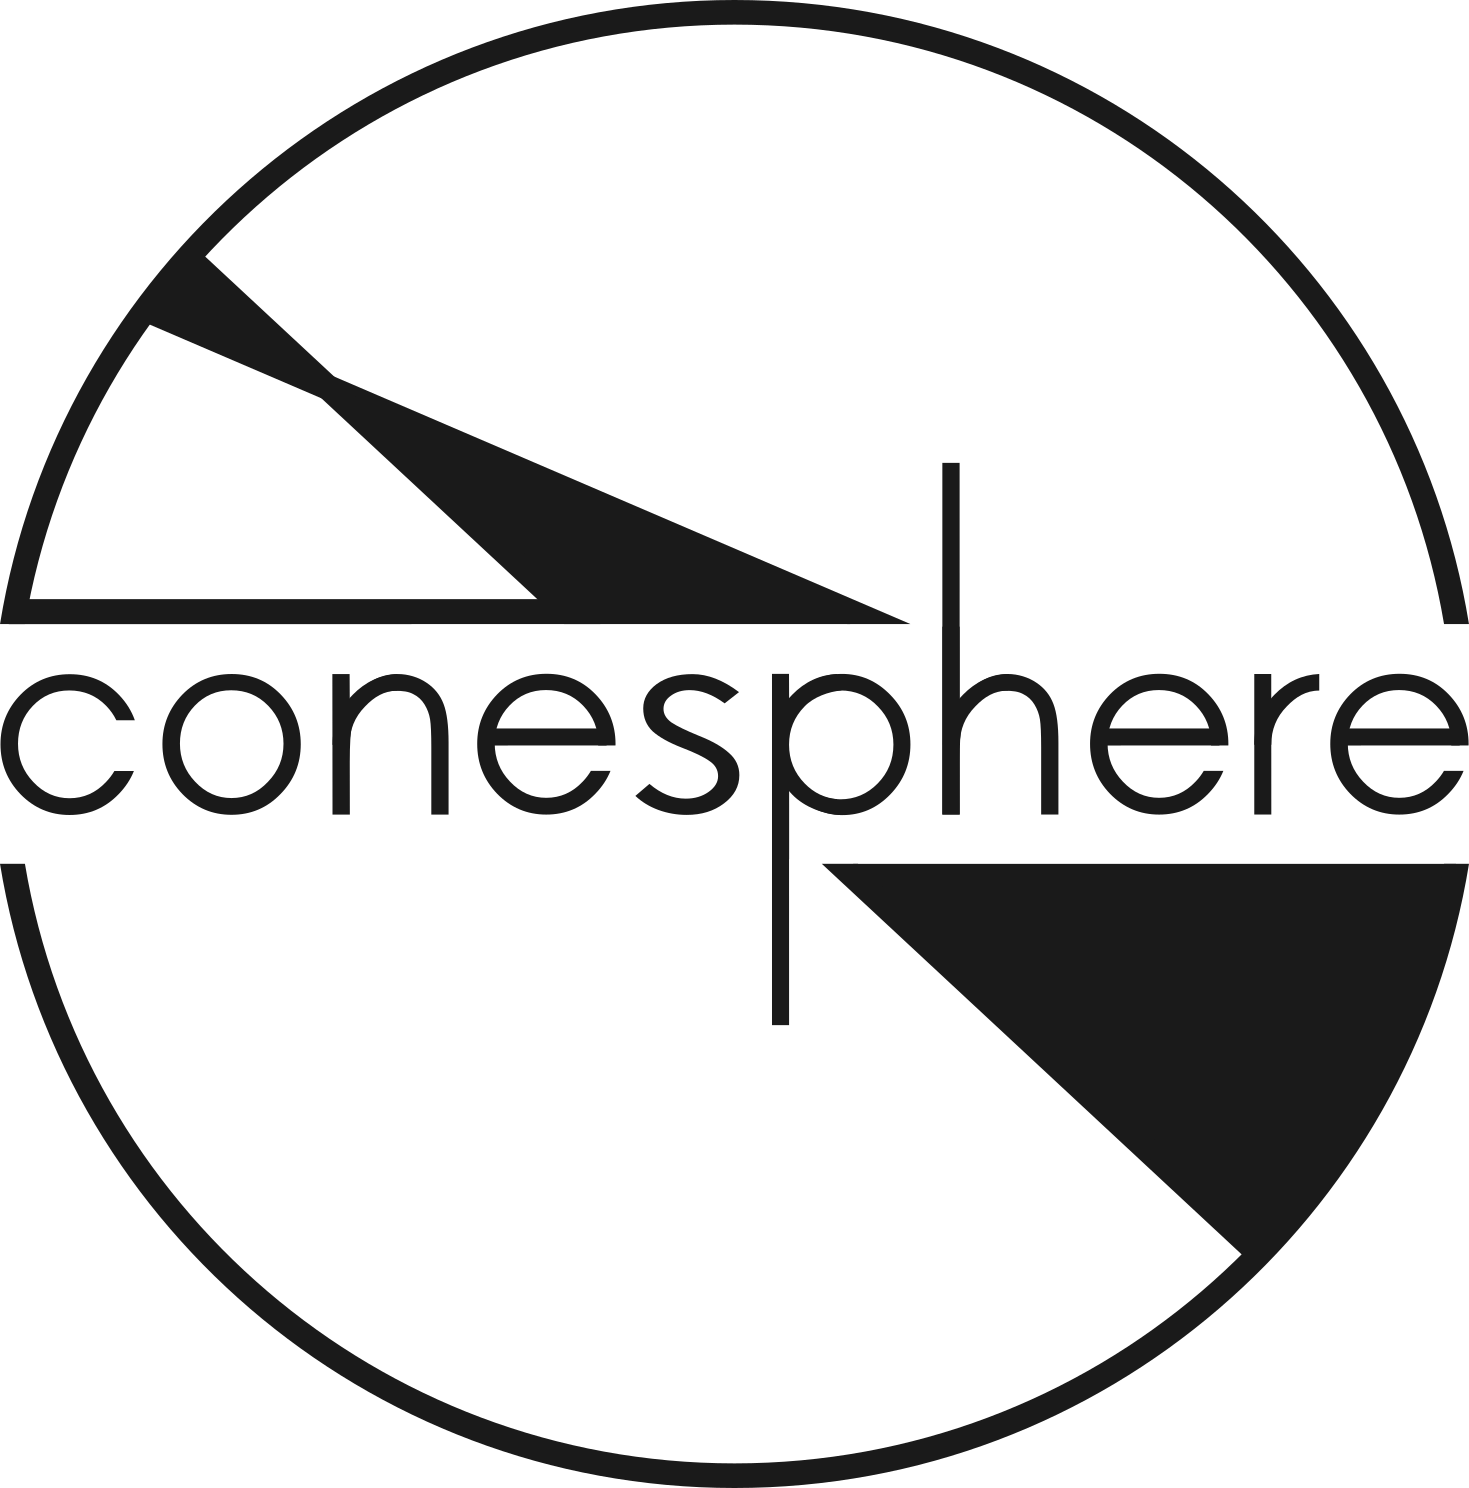 Conesphere